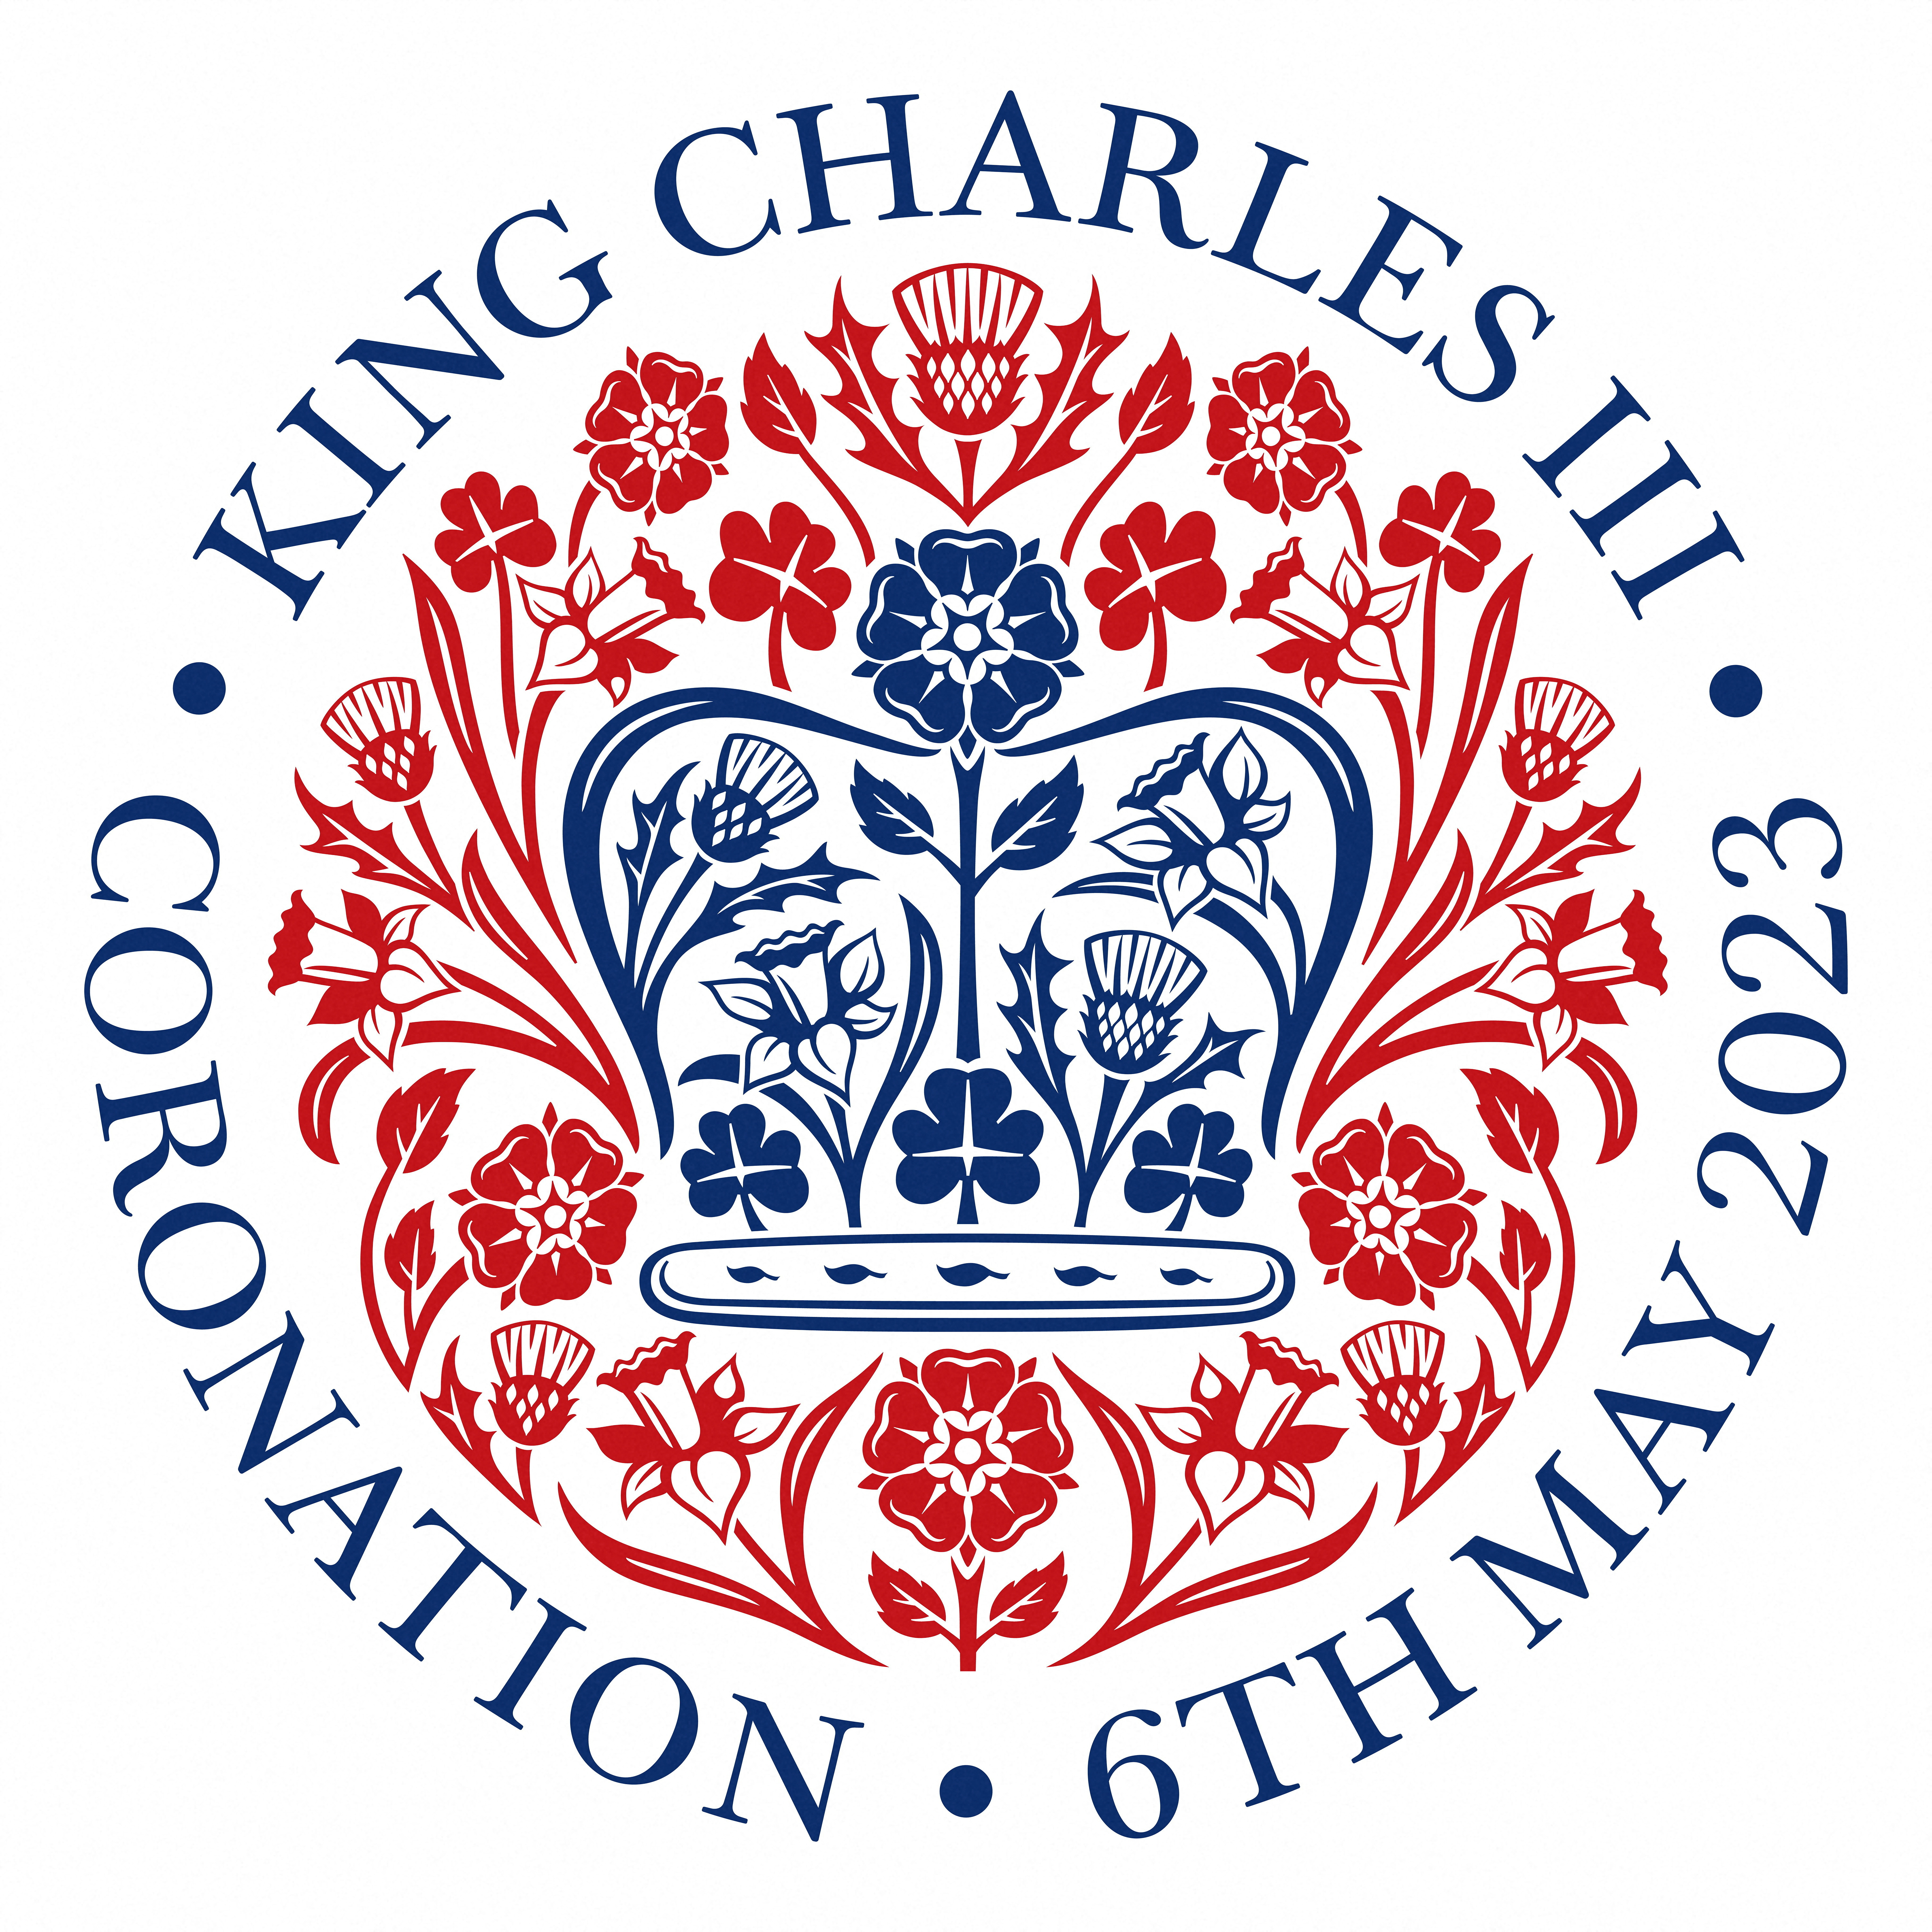 Coronation emblem of Britain's King Charles